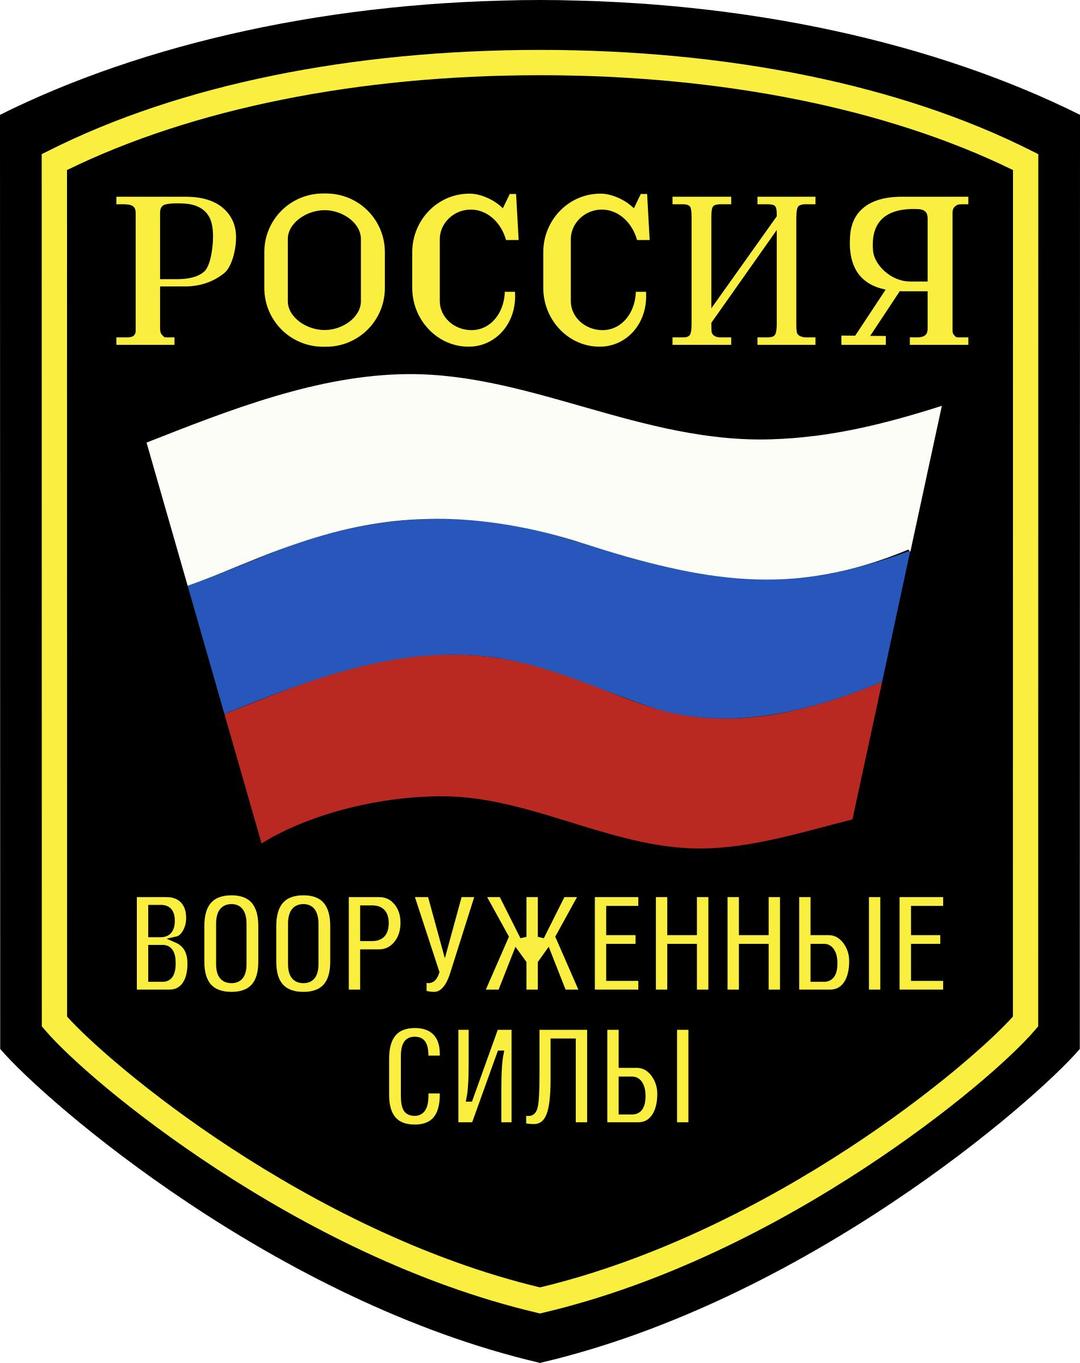 Russian Armed Forces shoulder patch png transparent